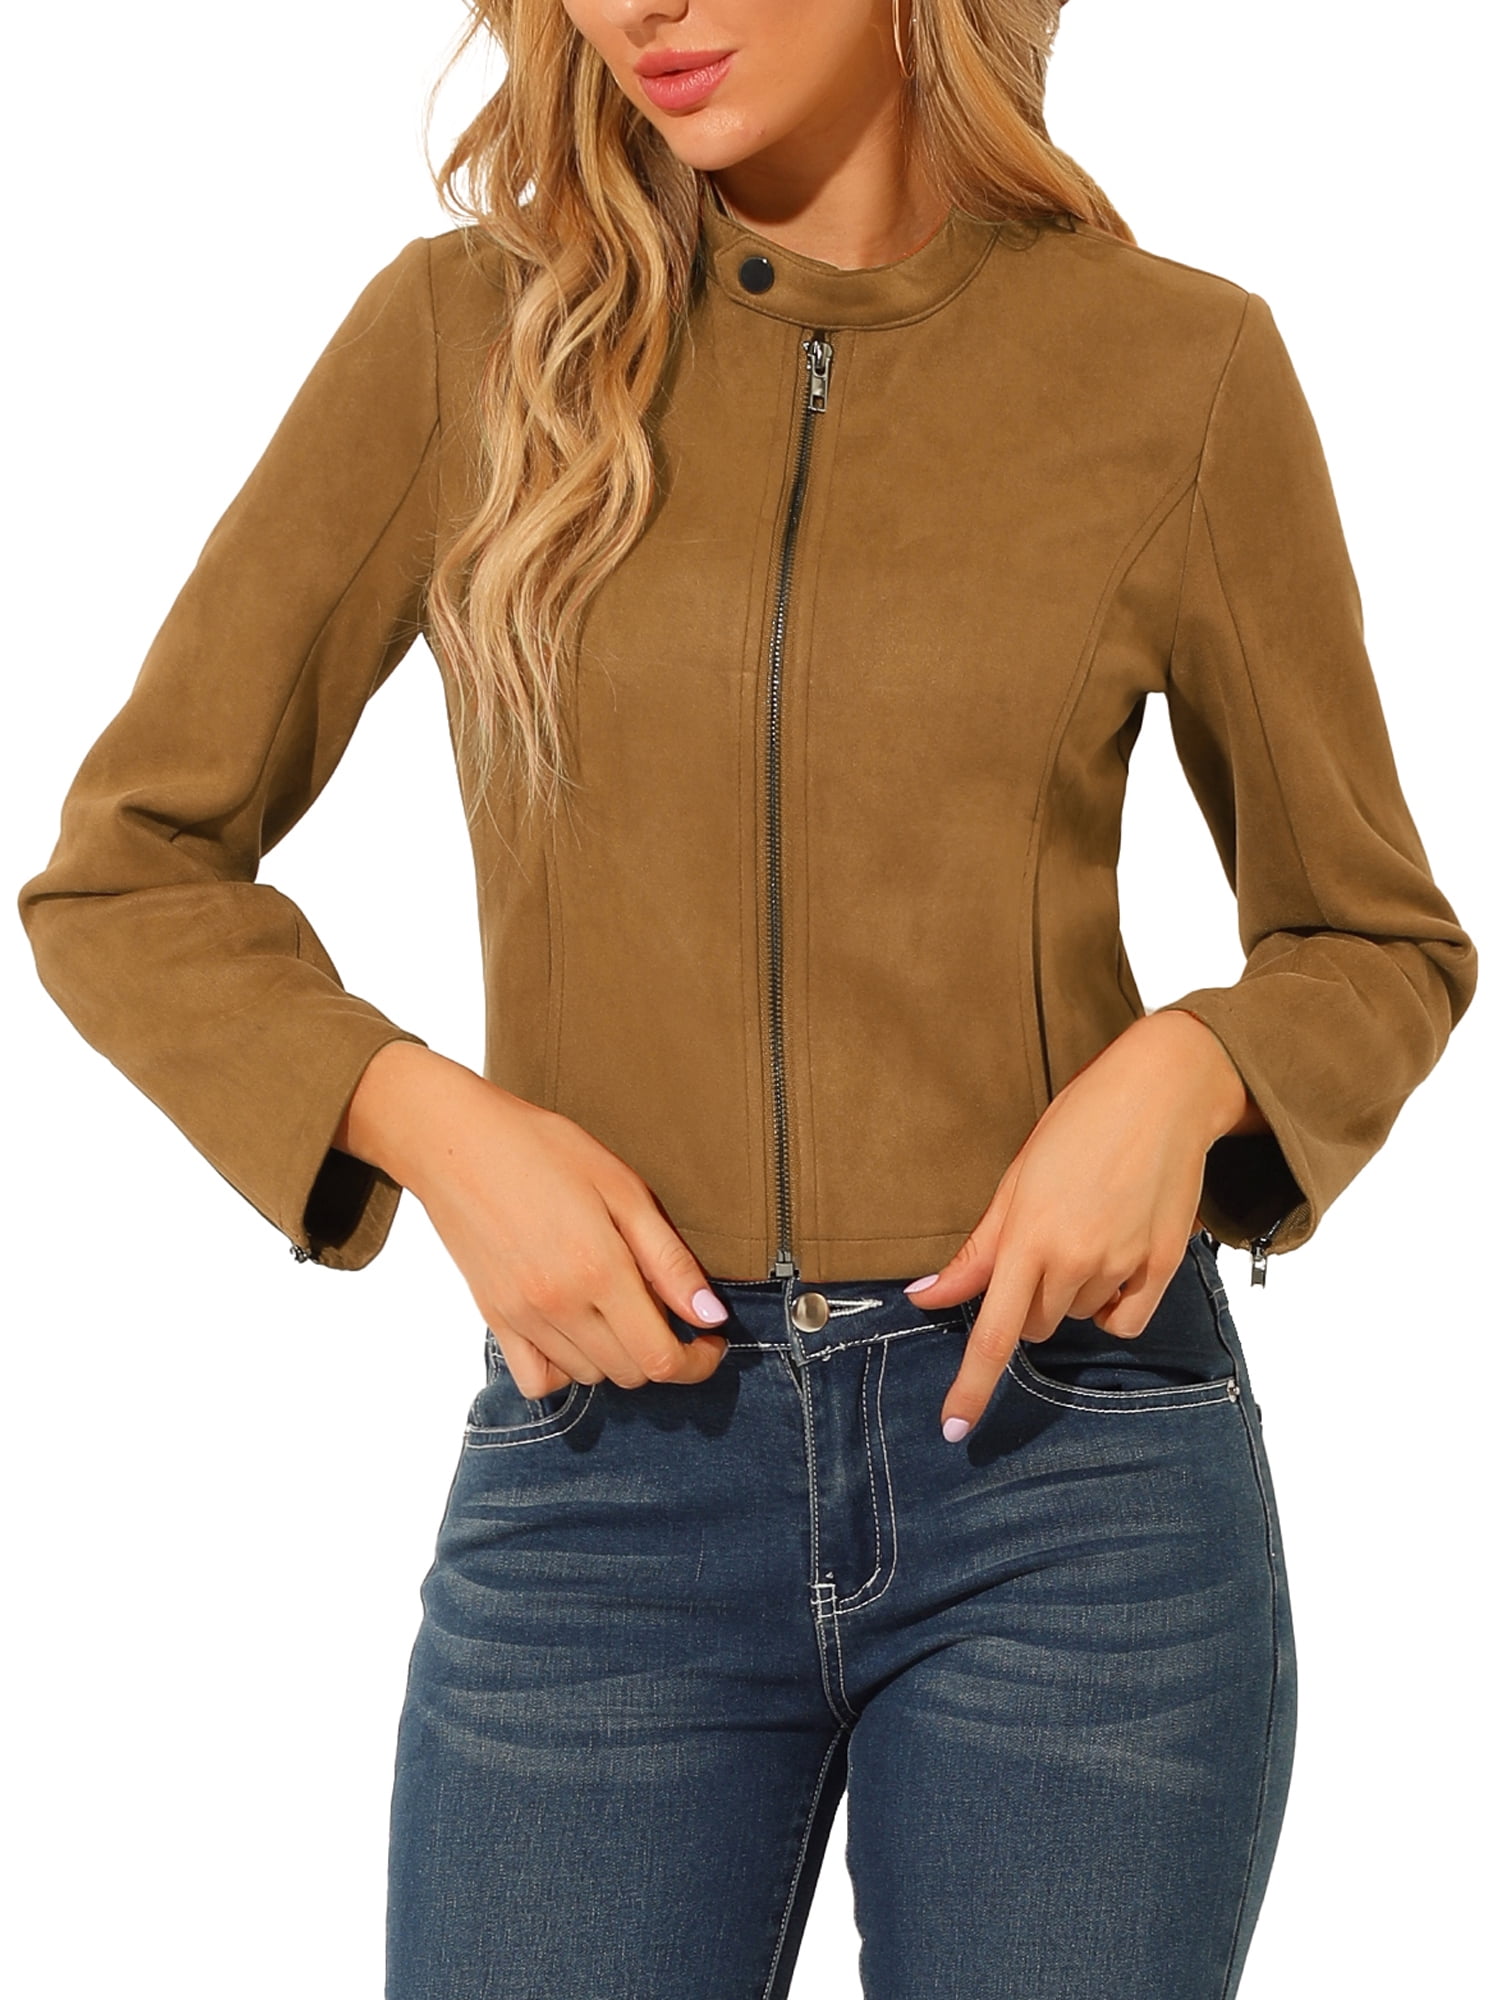 Unique Bargains Women's Faux Suede Stand Collar Zip Up Long Sleeve Moto  Jacket L Pink